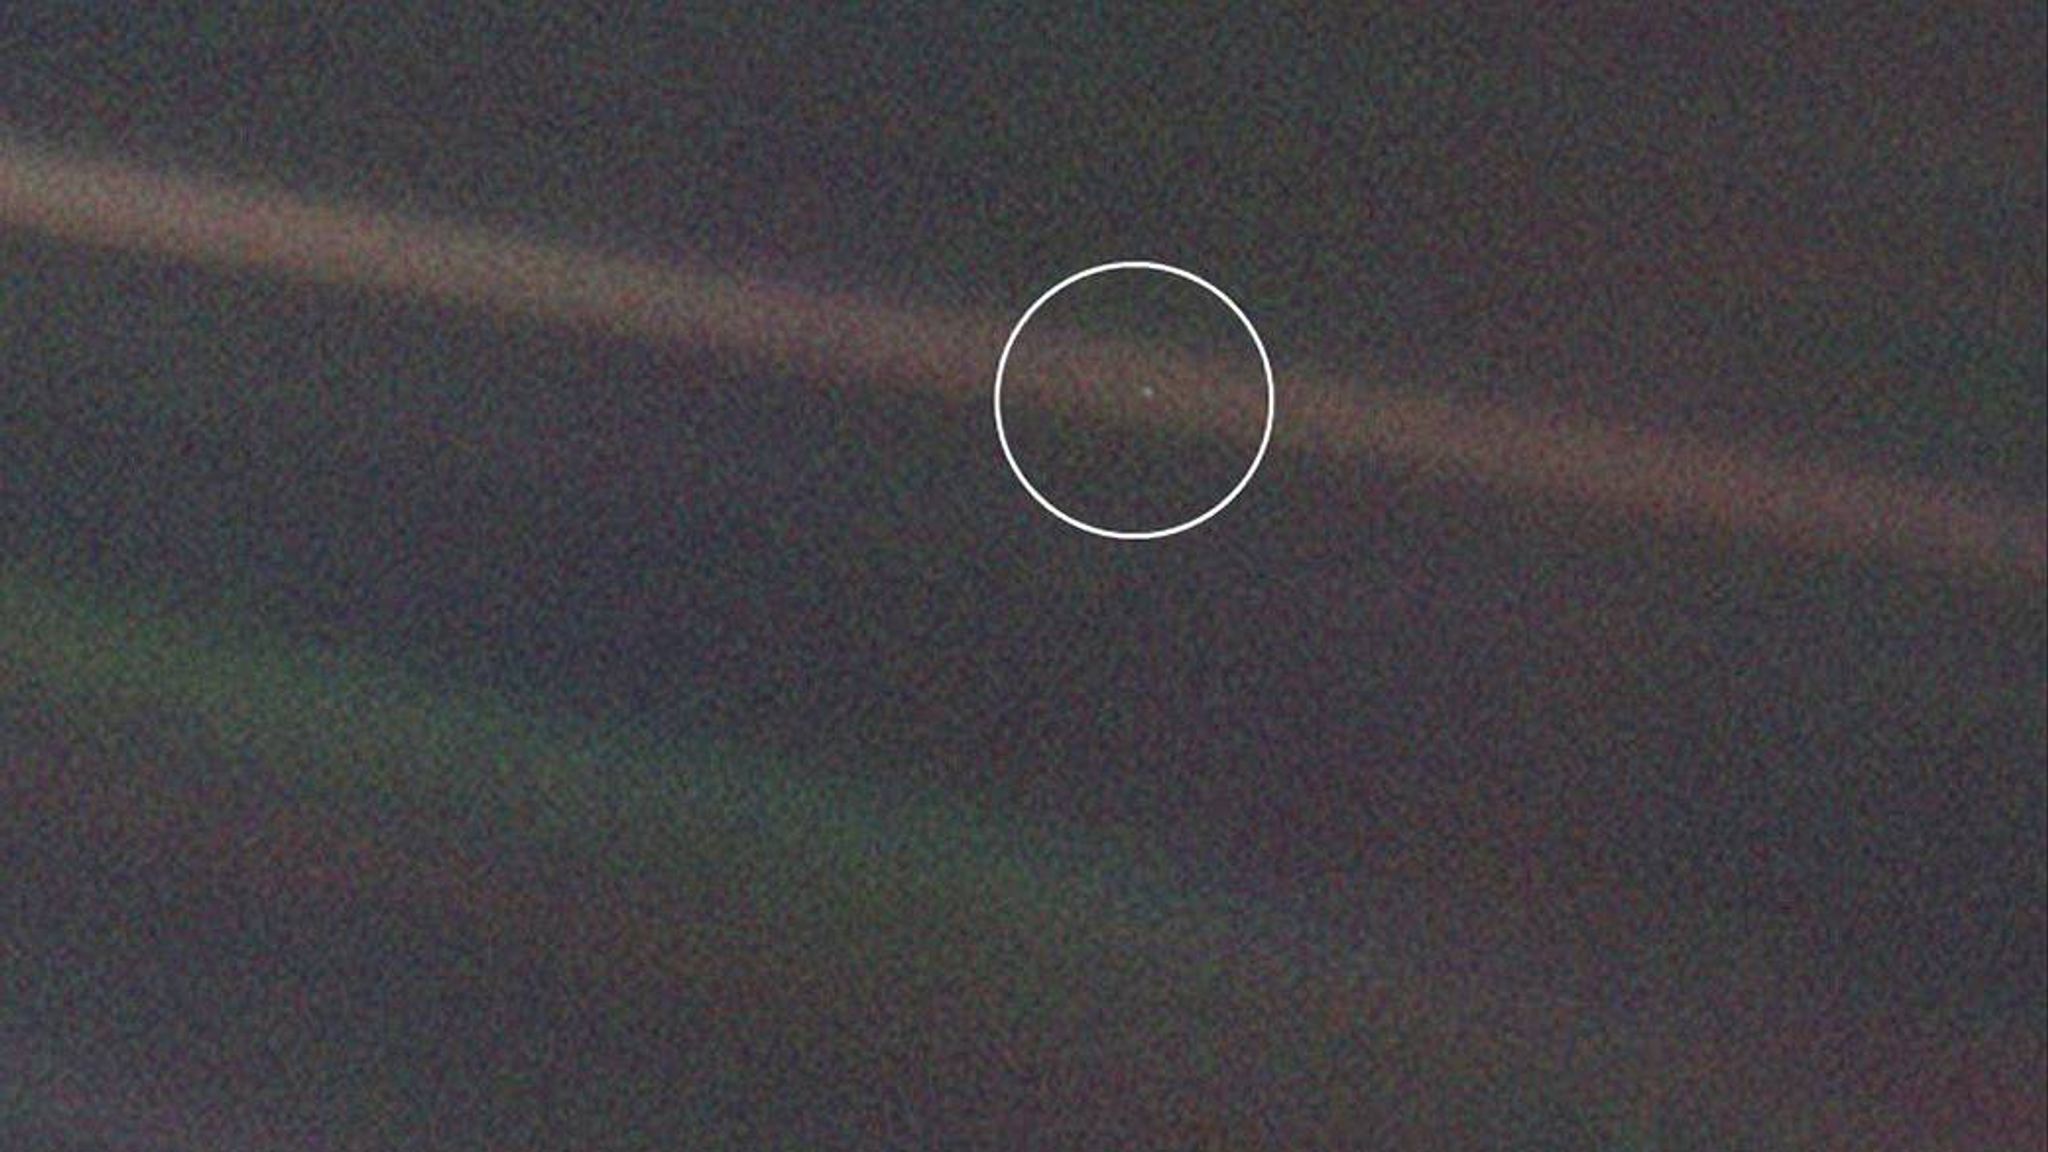 Pale Blue Dot снимок земли